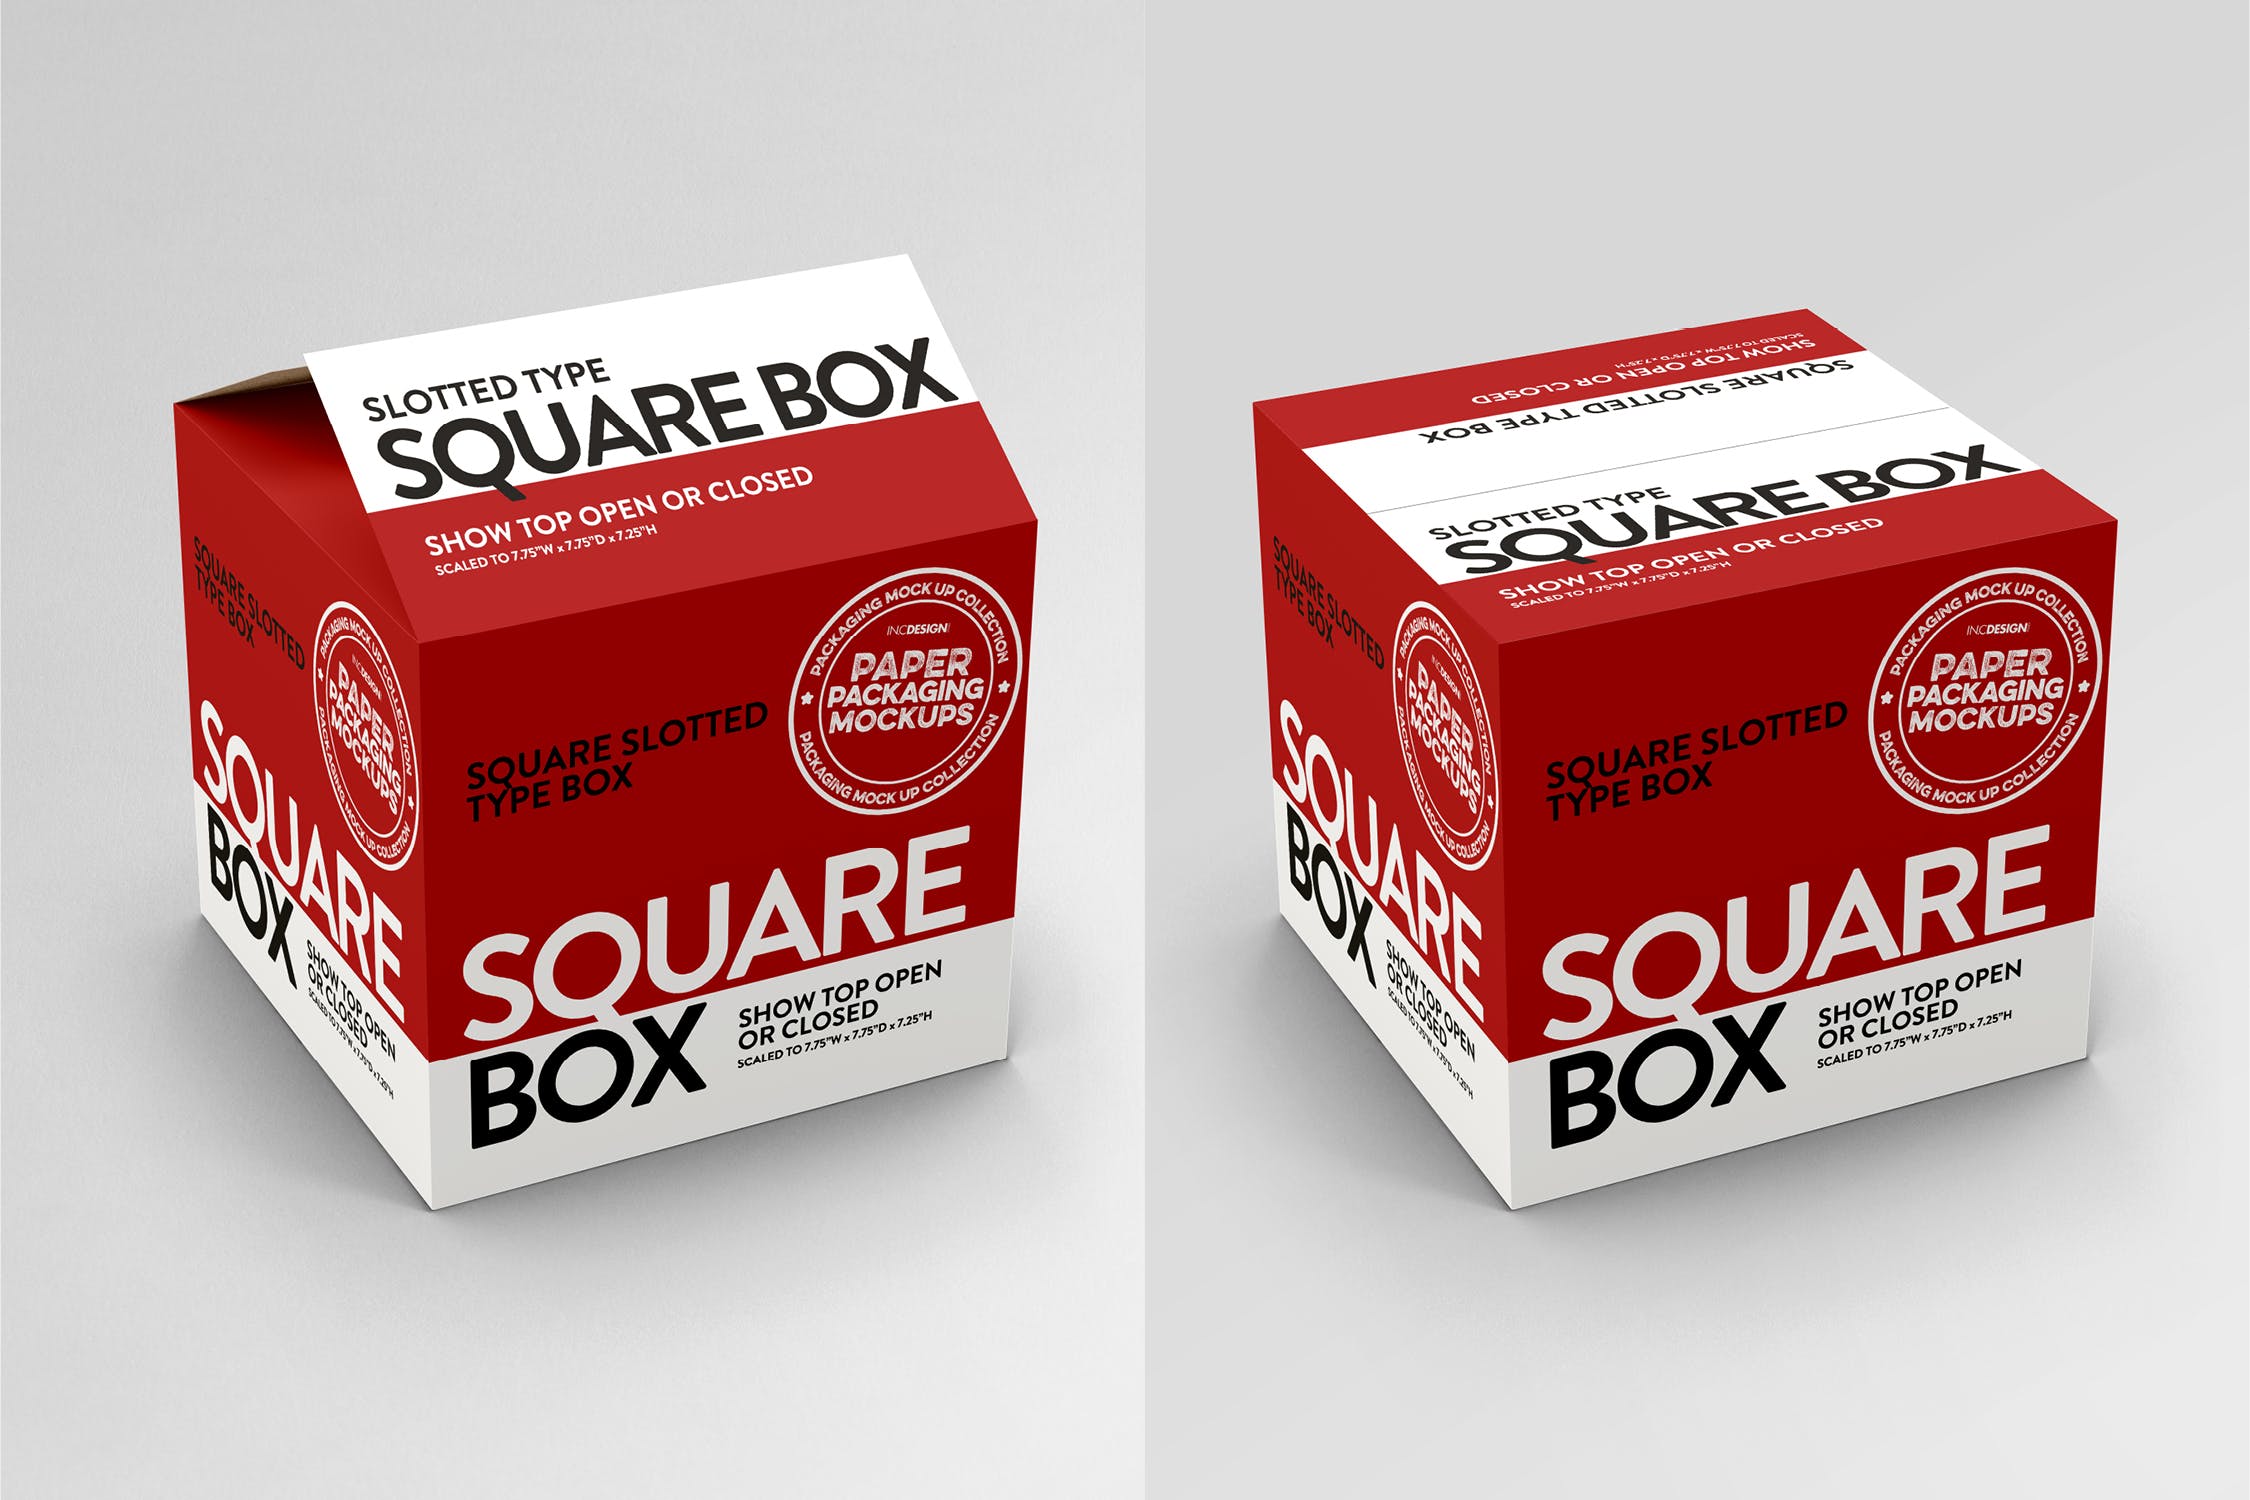 方形开槽纸盒包装设计效果图样机 Square Slotted-Type Paper Box Packaging Mockup插图(1)